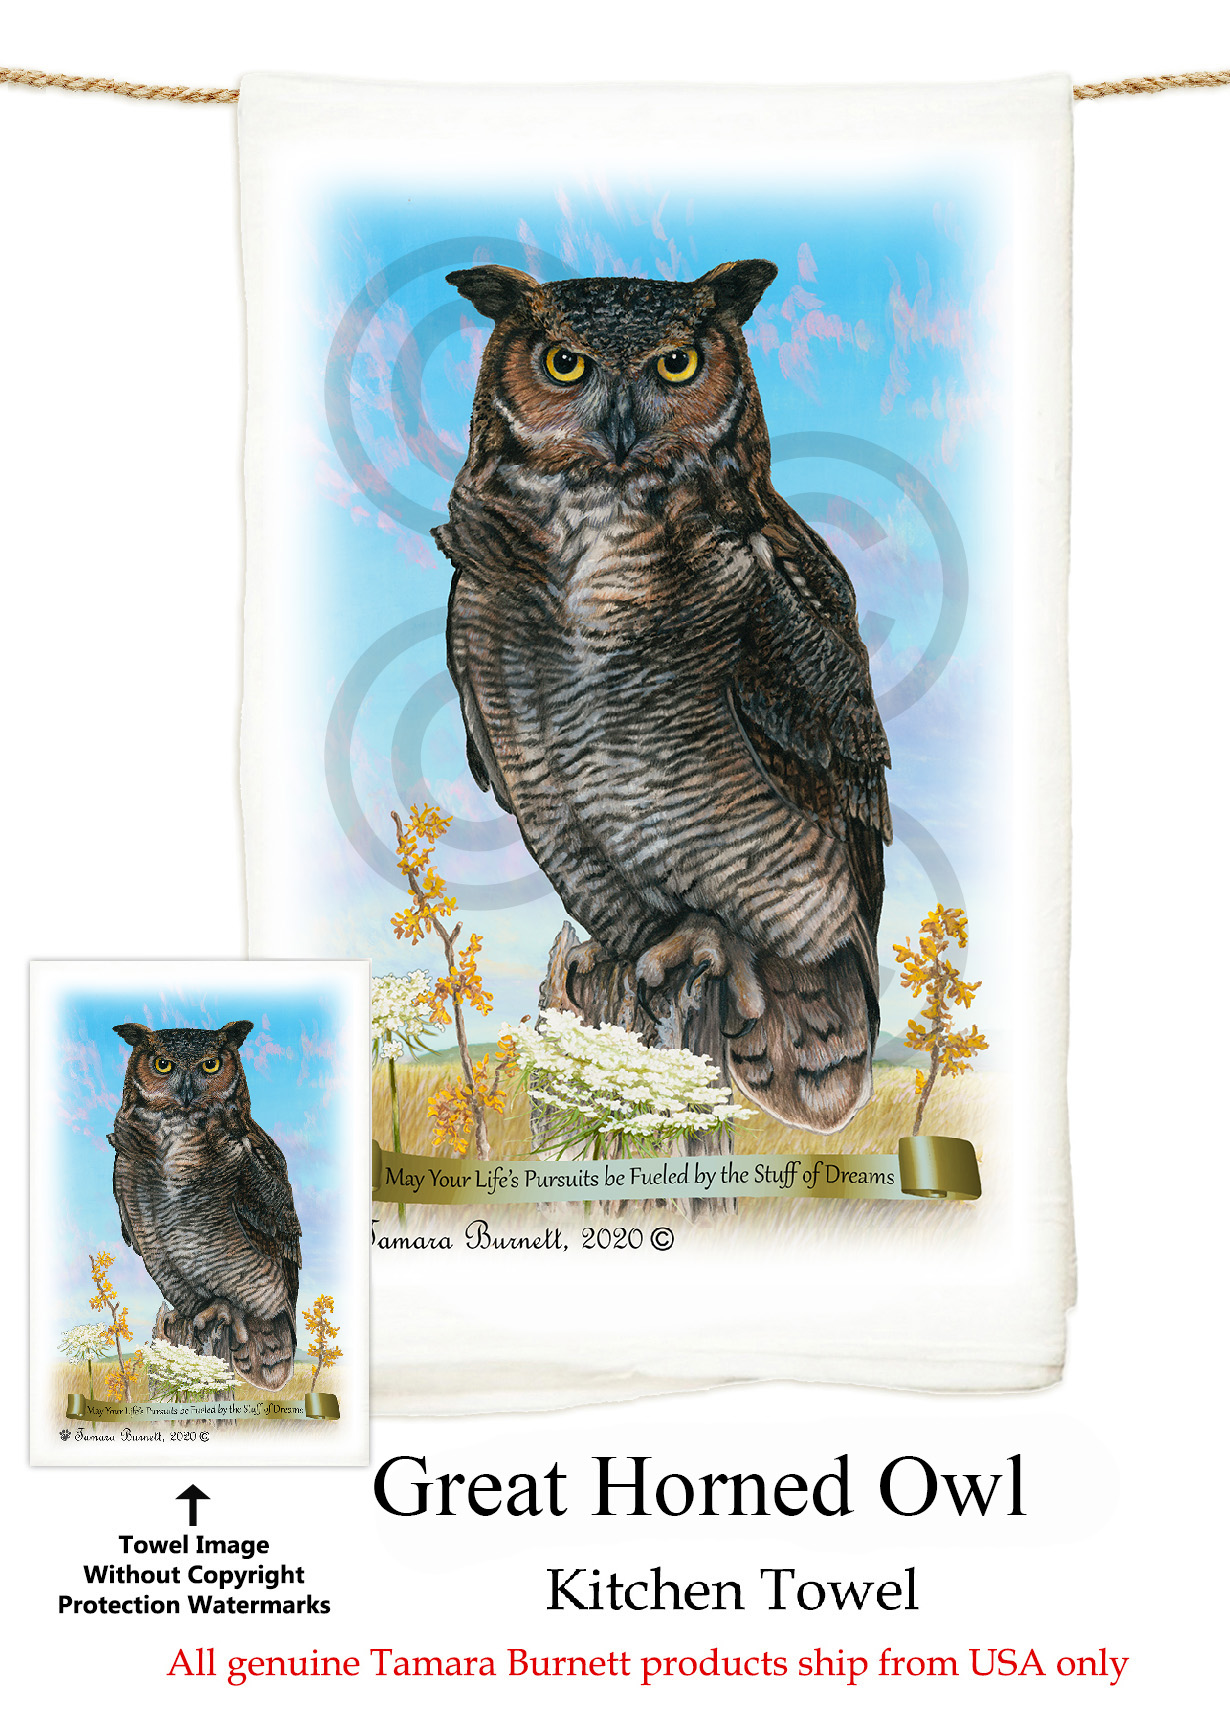 Great Horned Owl - Flour Sack Towel image sized 1230 x 1717